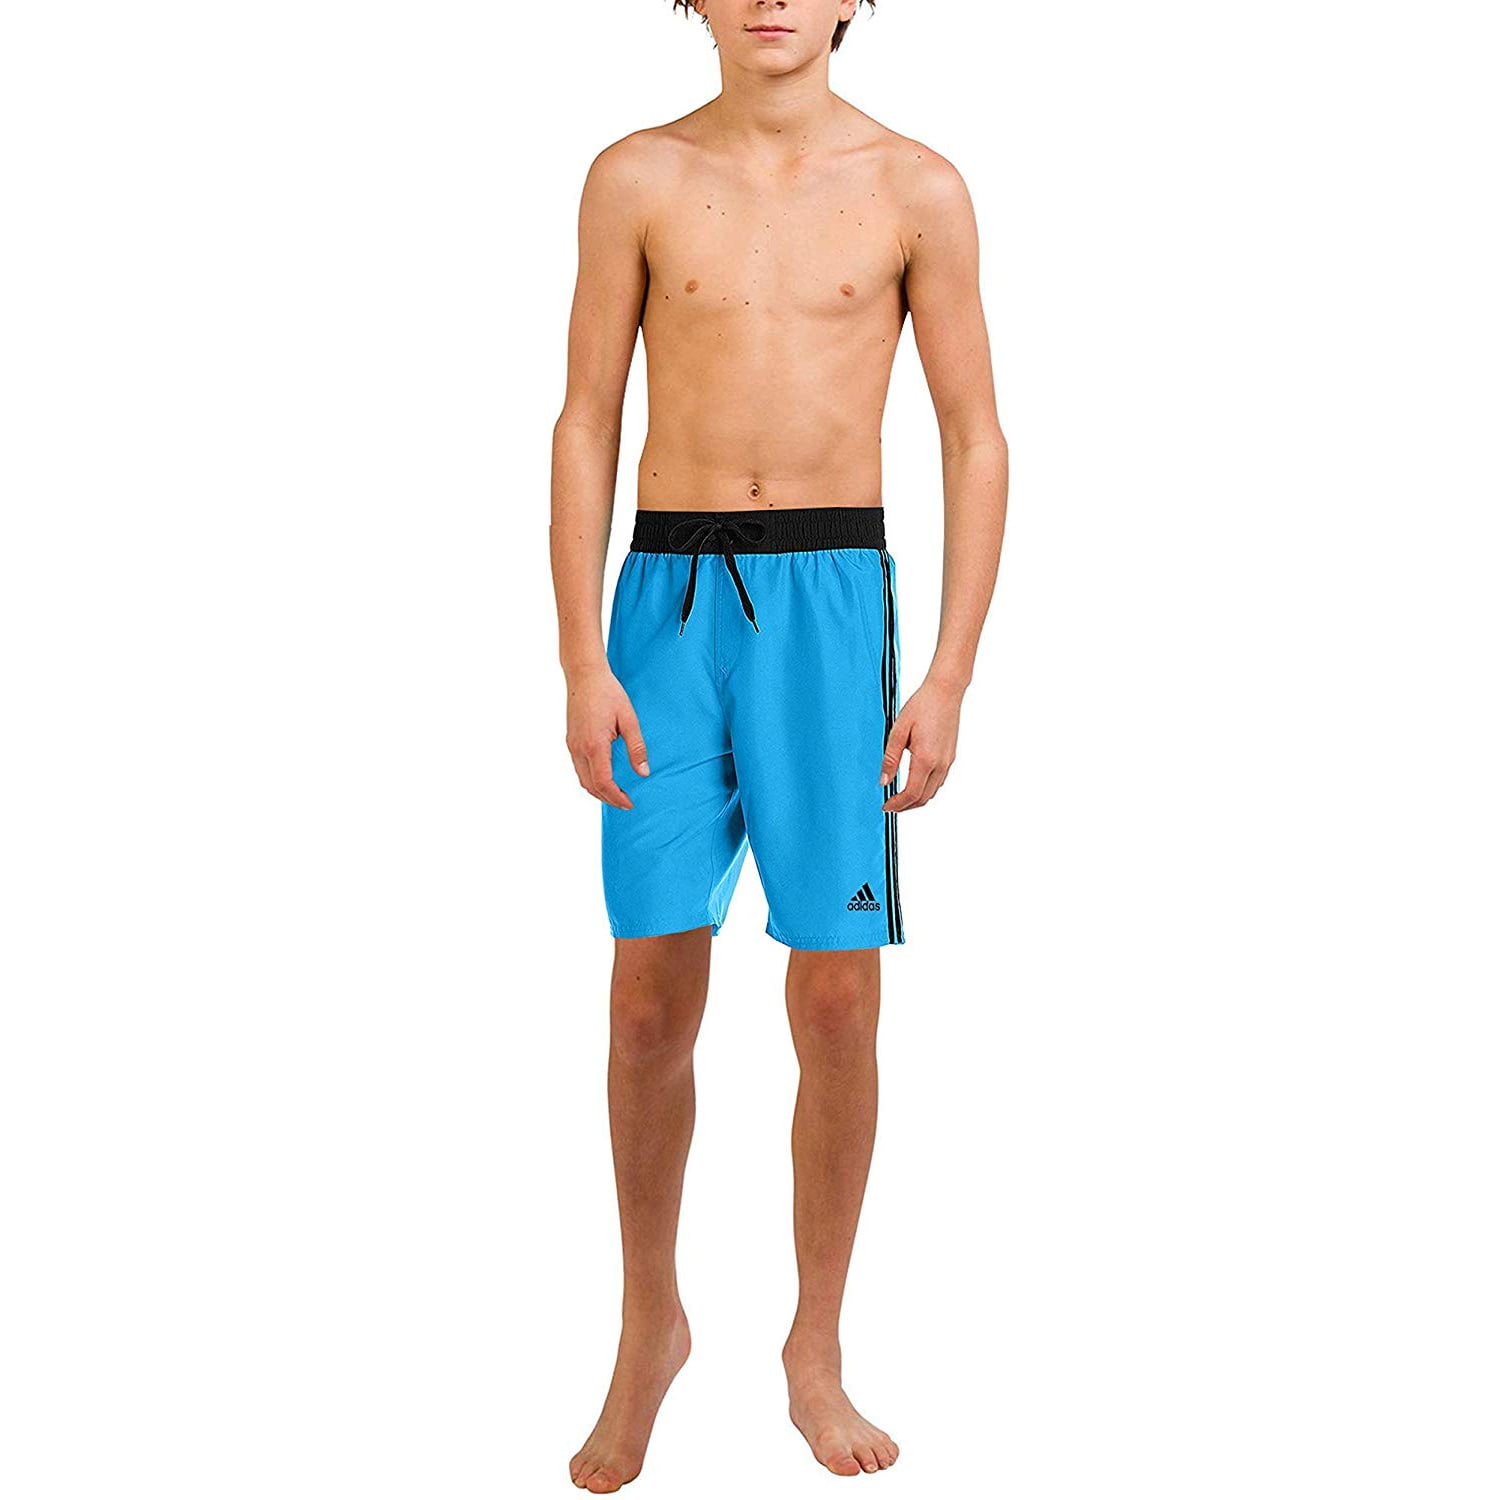 adidas boys swimming trunks